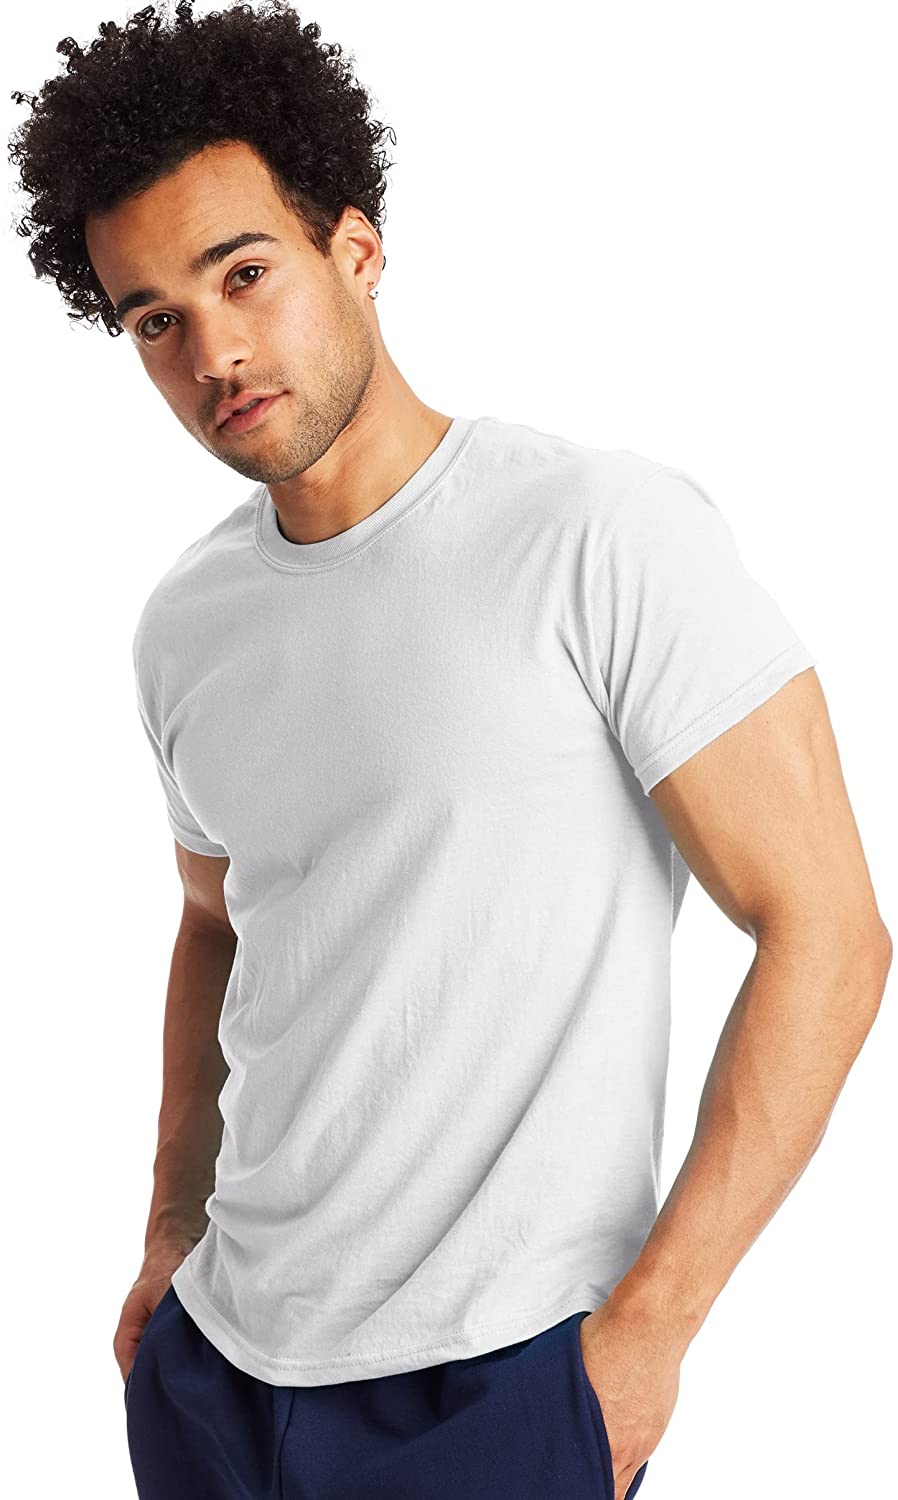 Men's 2 Pack X-Temp Performance T-Shirt